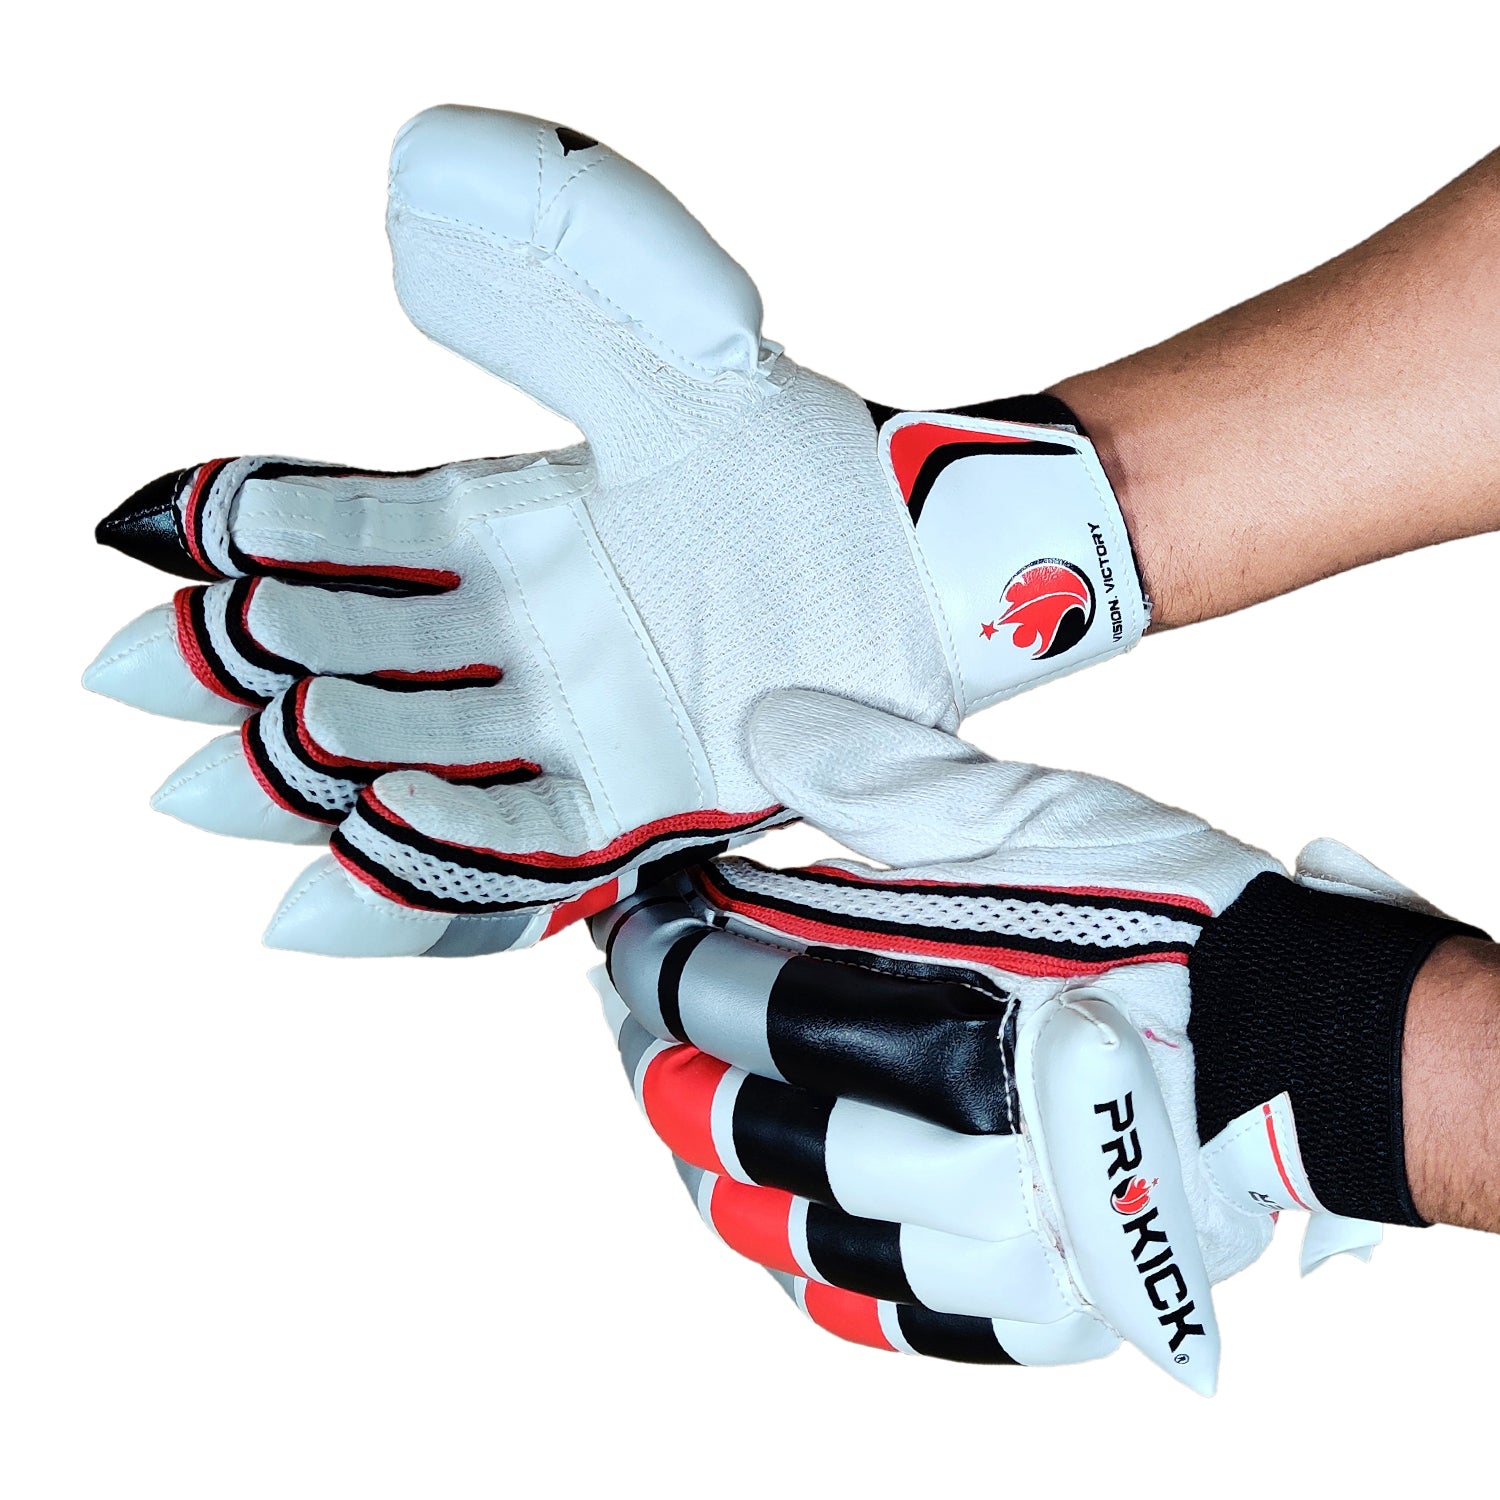 Prokick Pioneer RH Cricket Batting Gloves - Best Price online Prokicksports.com